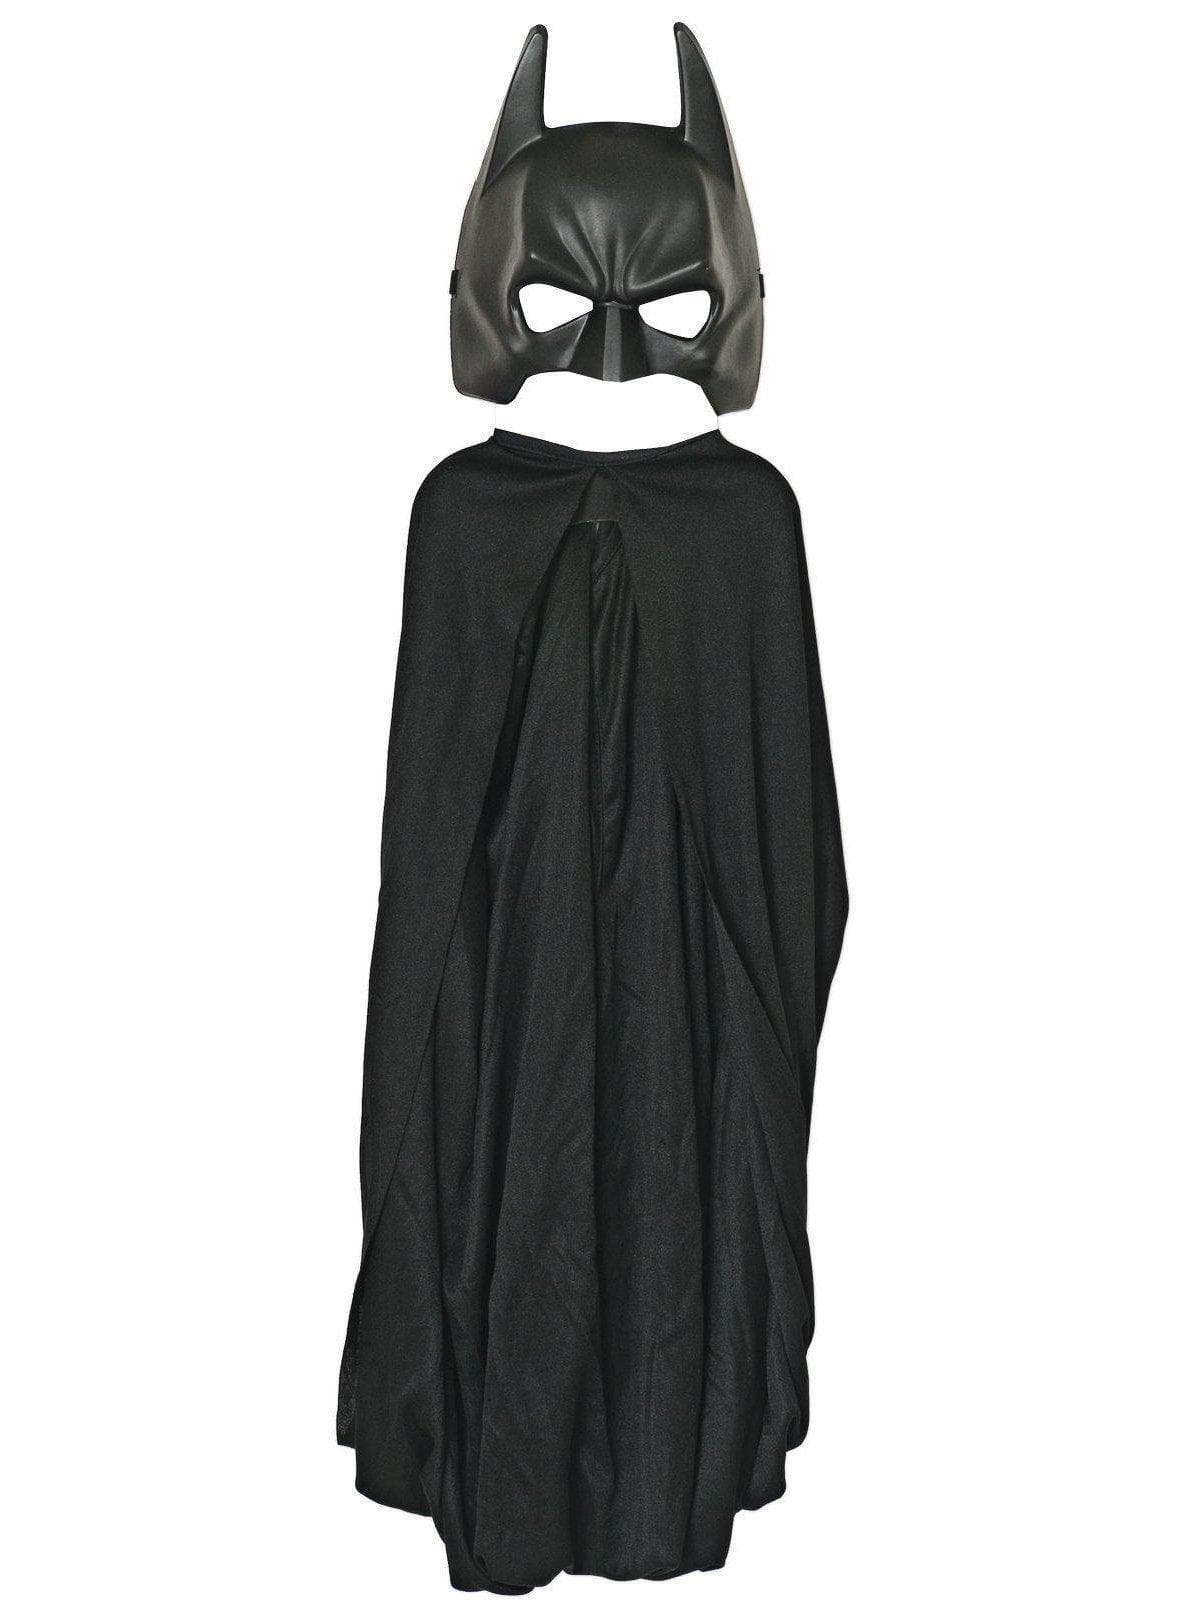 Boys' The Dark Knight Rises Batman Cape and Mask - costumes.com